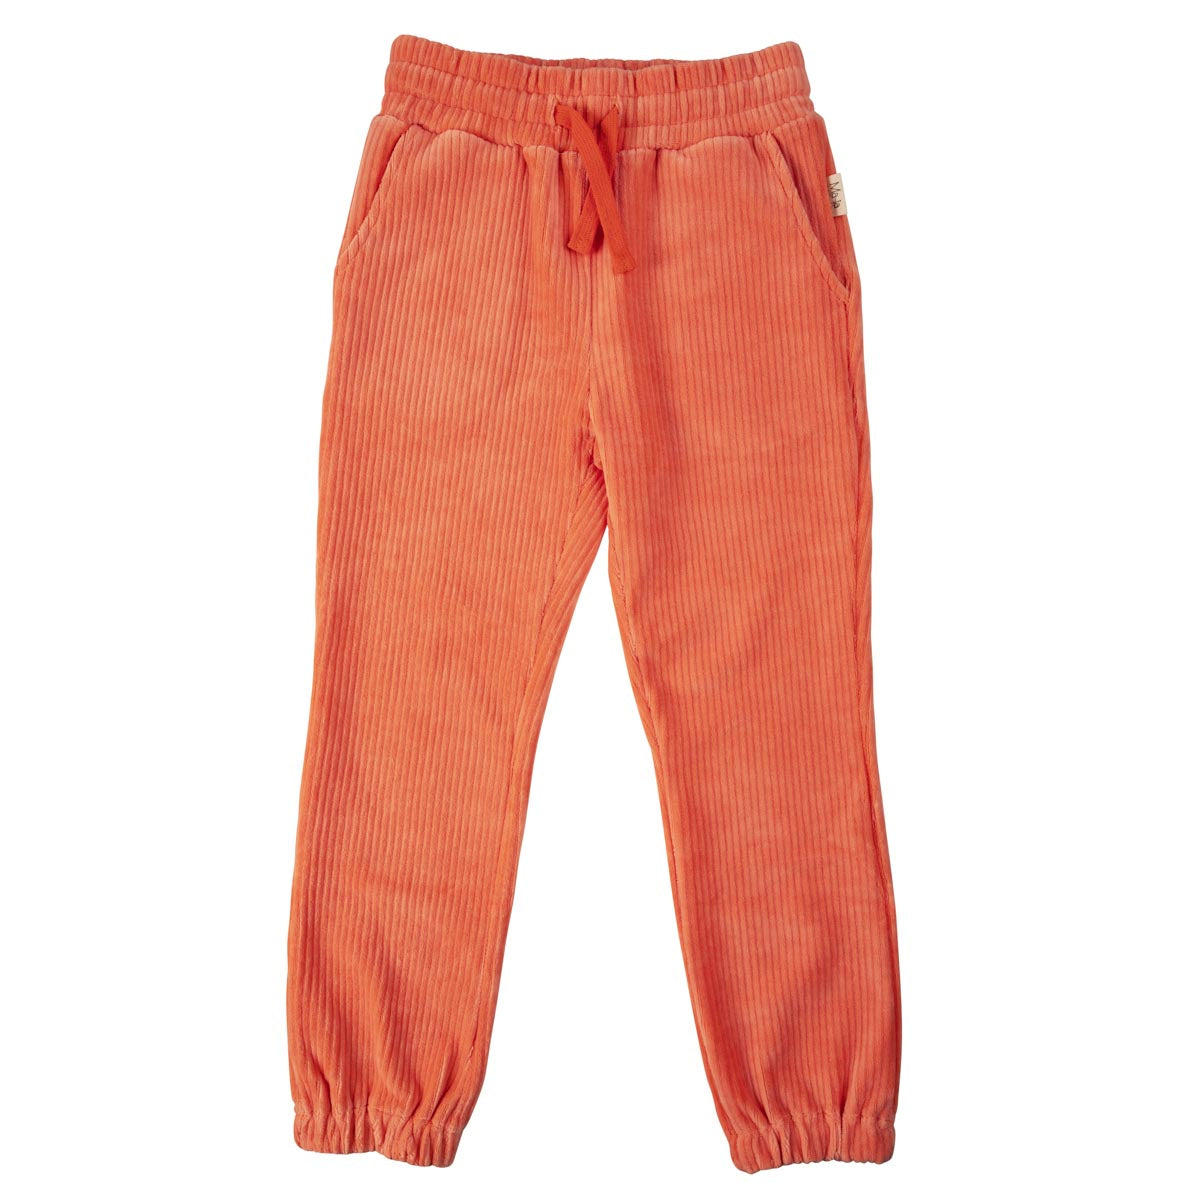 Merri Trousers, orange